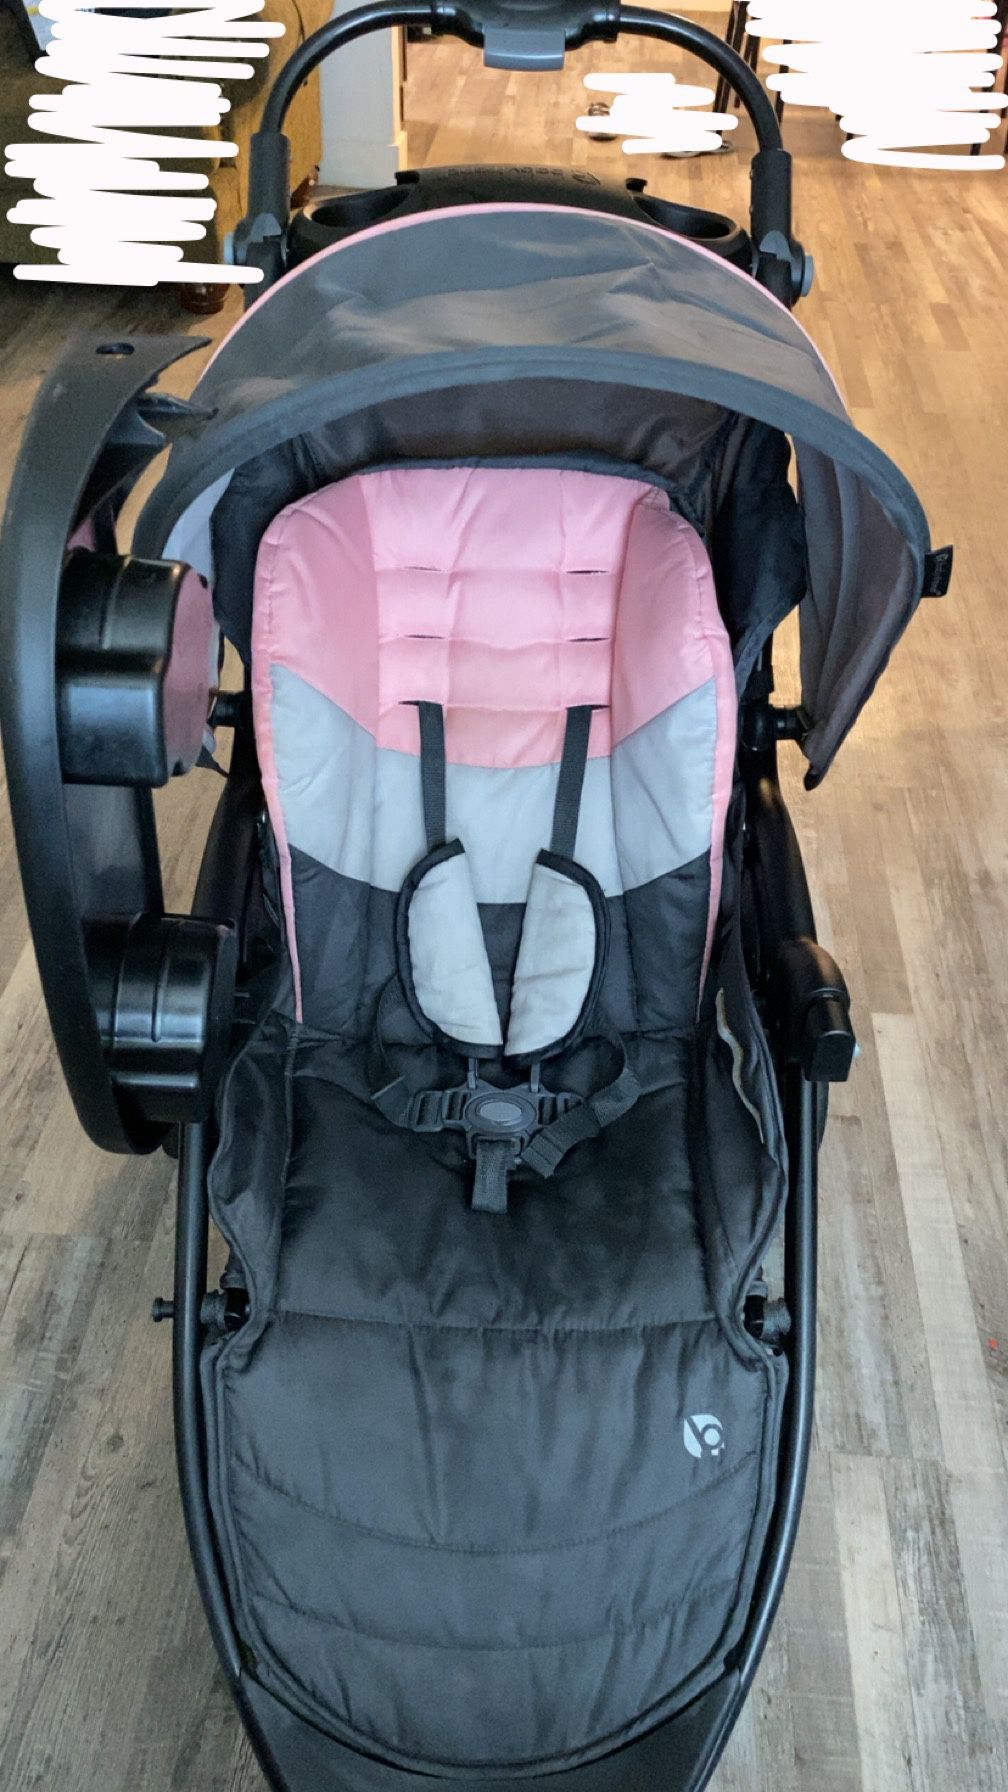 Baby Trend Ride Travel System Stroller